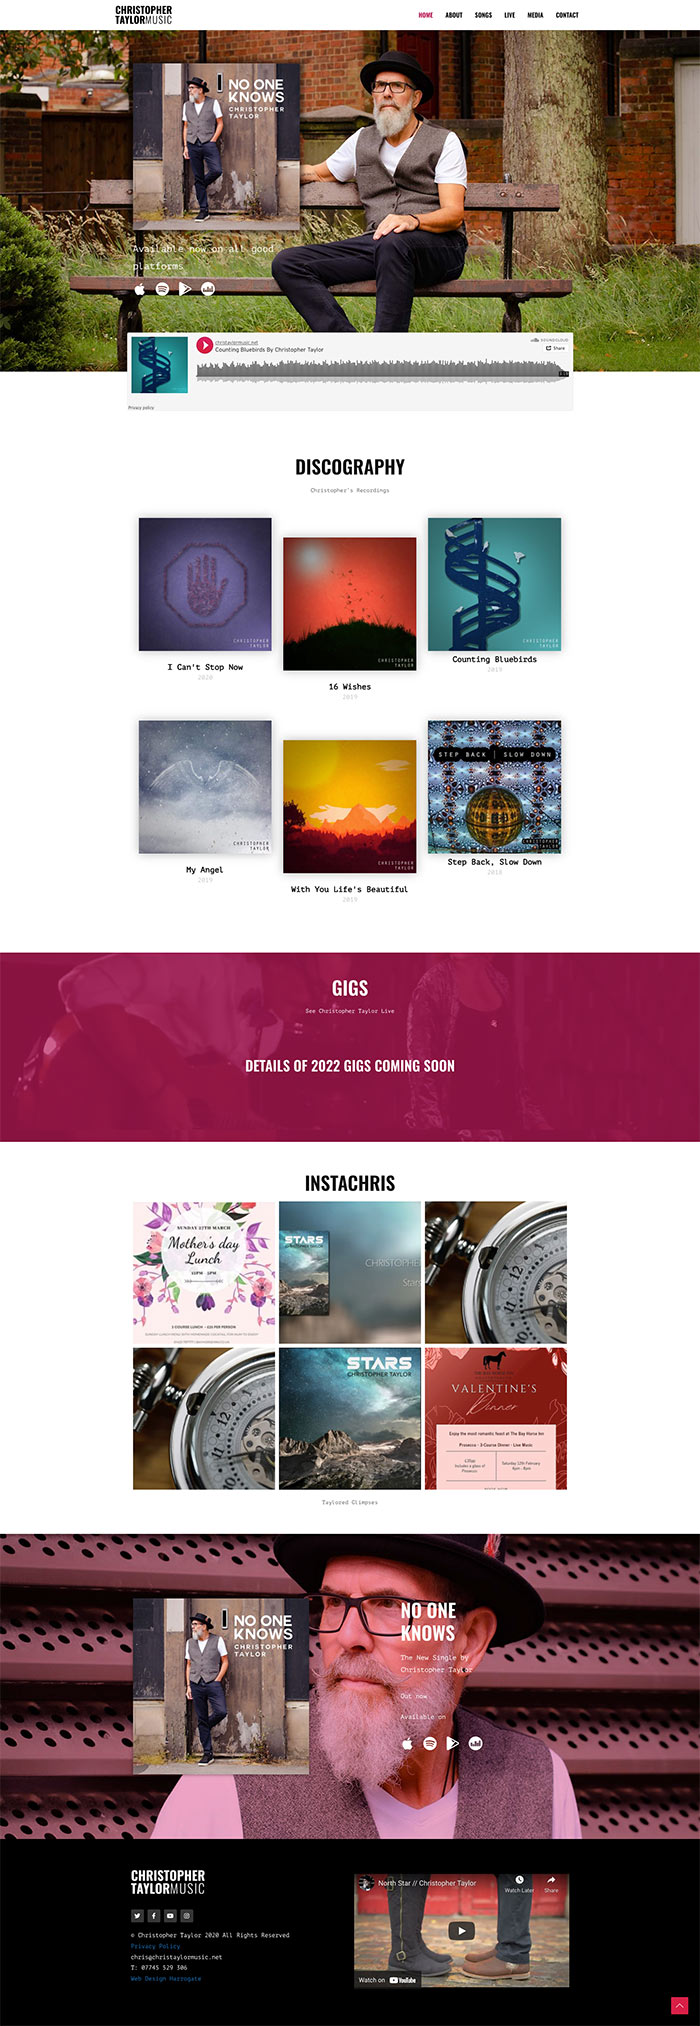 Musician's website design